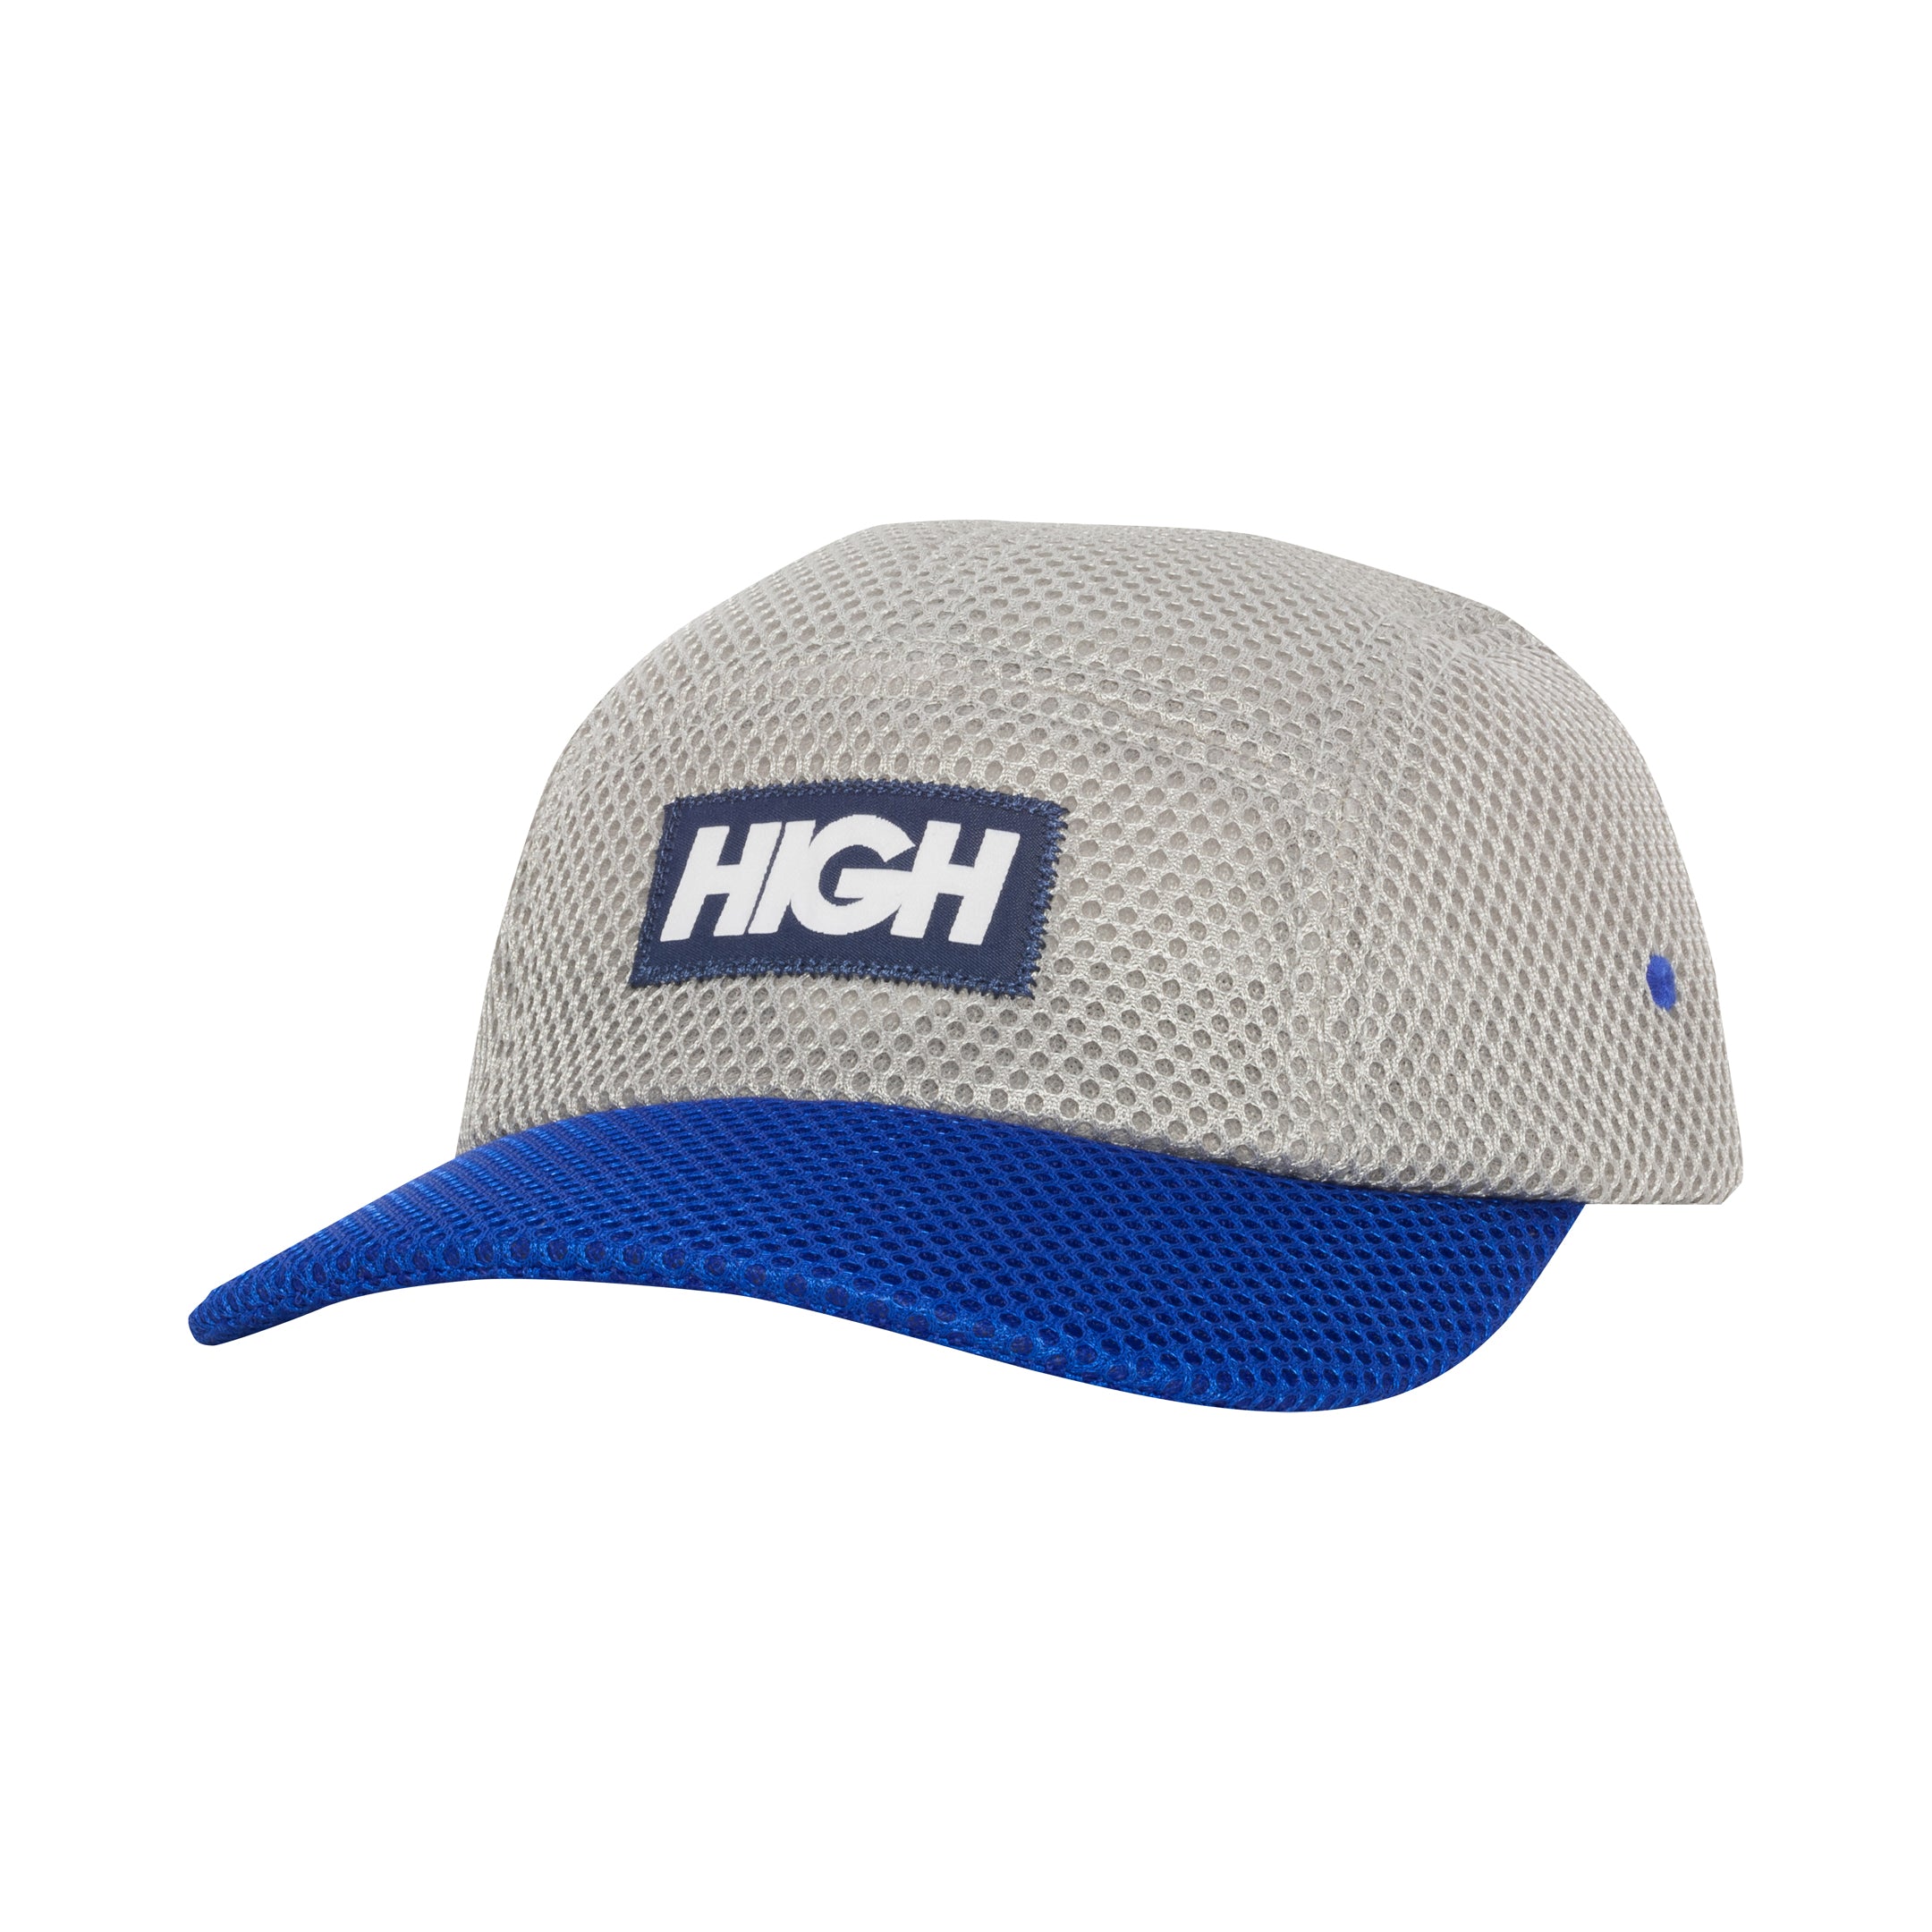 HIGH - 5 Panel Space Mesh Grey